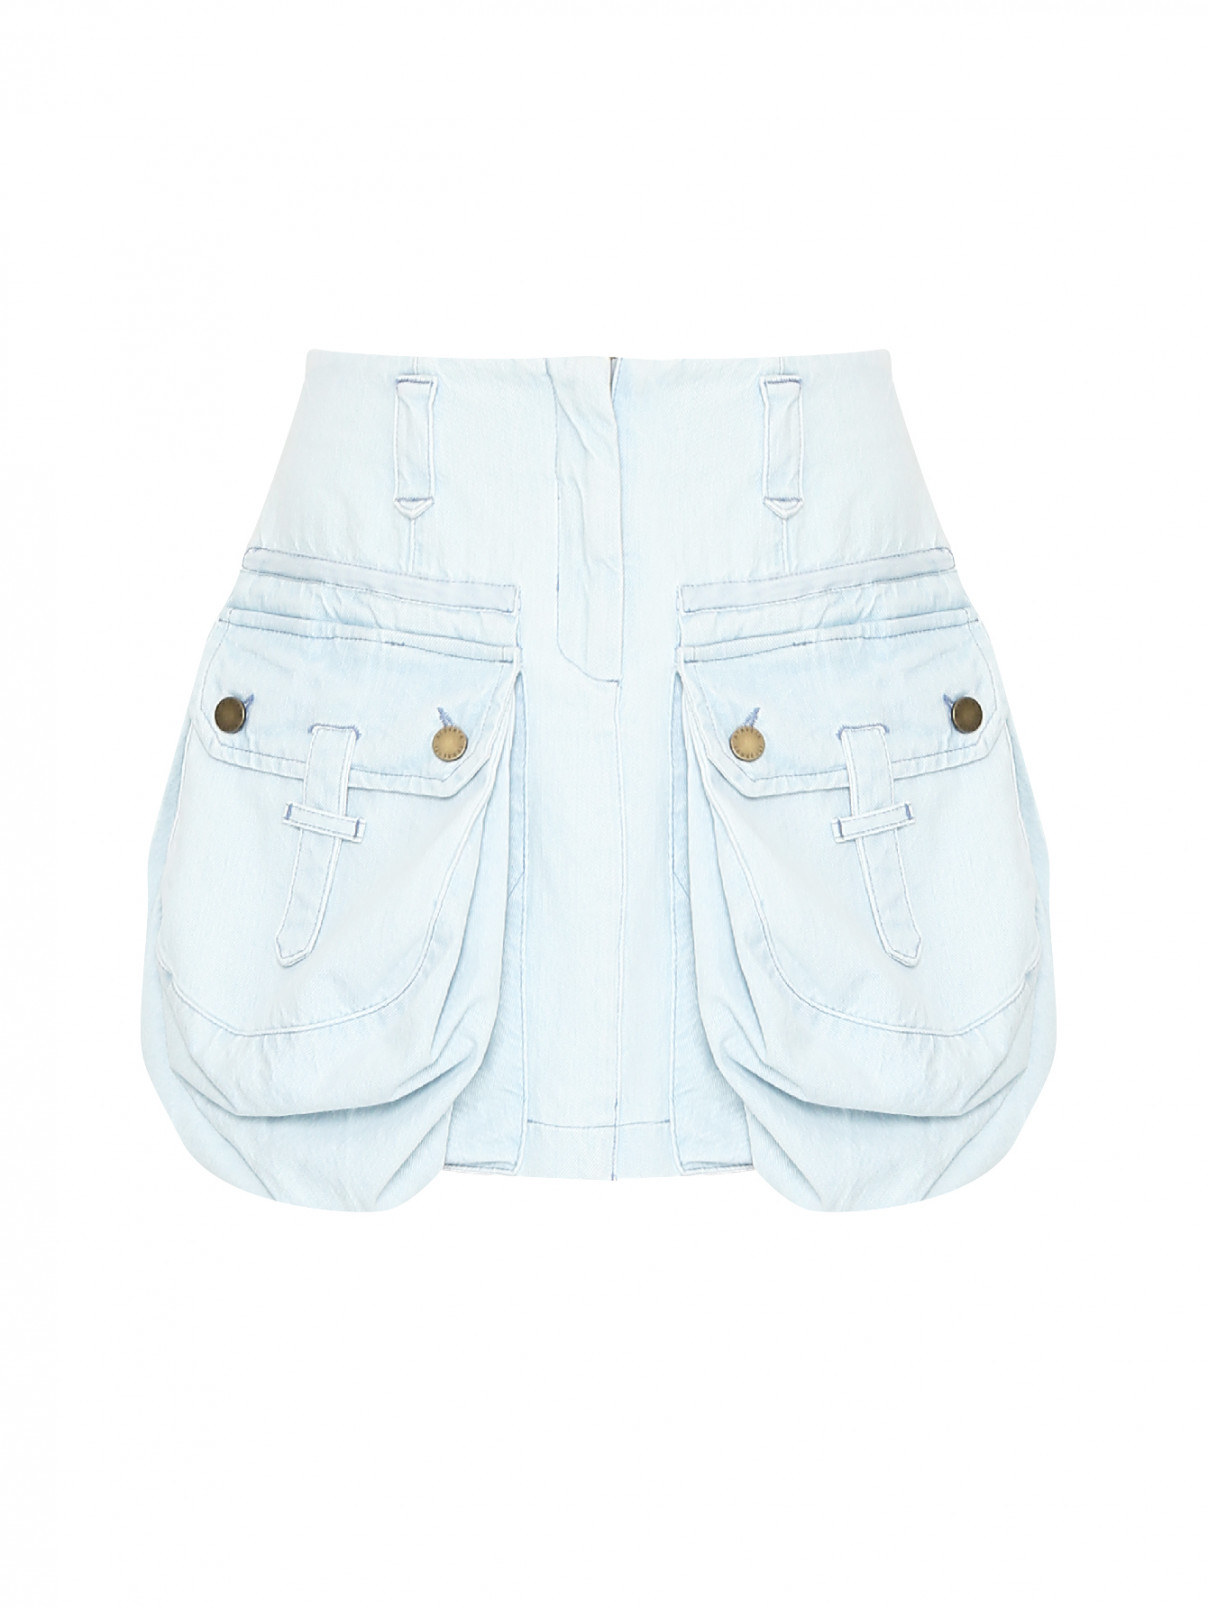 Юбка джинсовая с накладными карманами Alberta Ferretti  –  Общий вид  – Цвет:  Синий